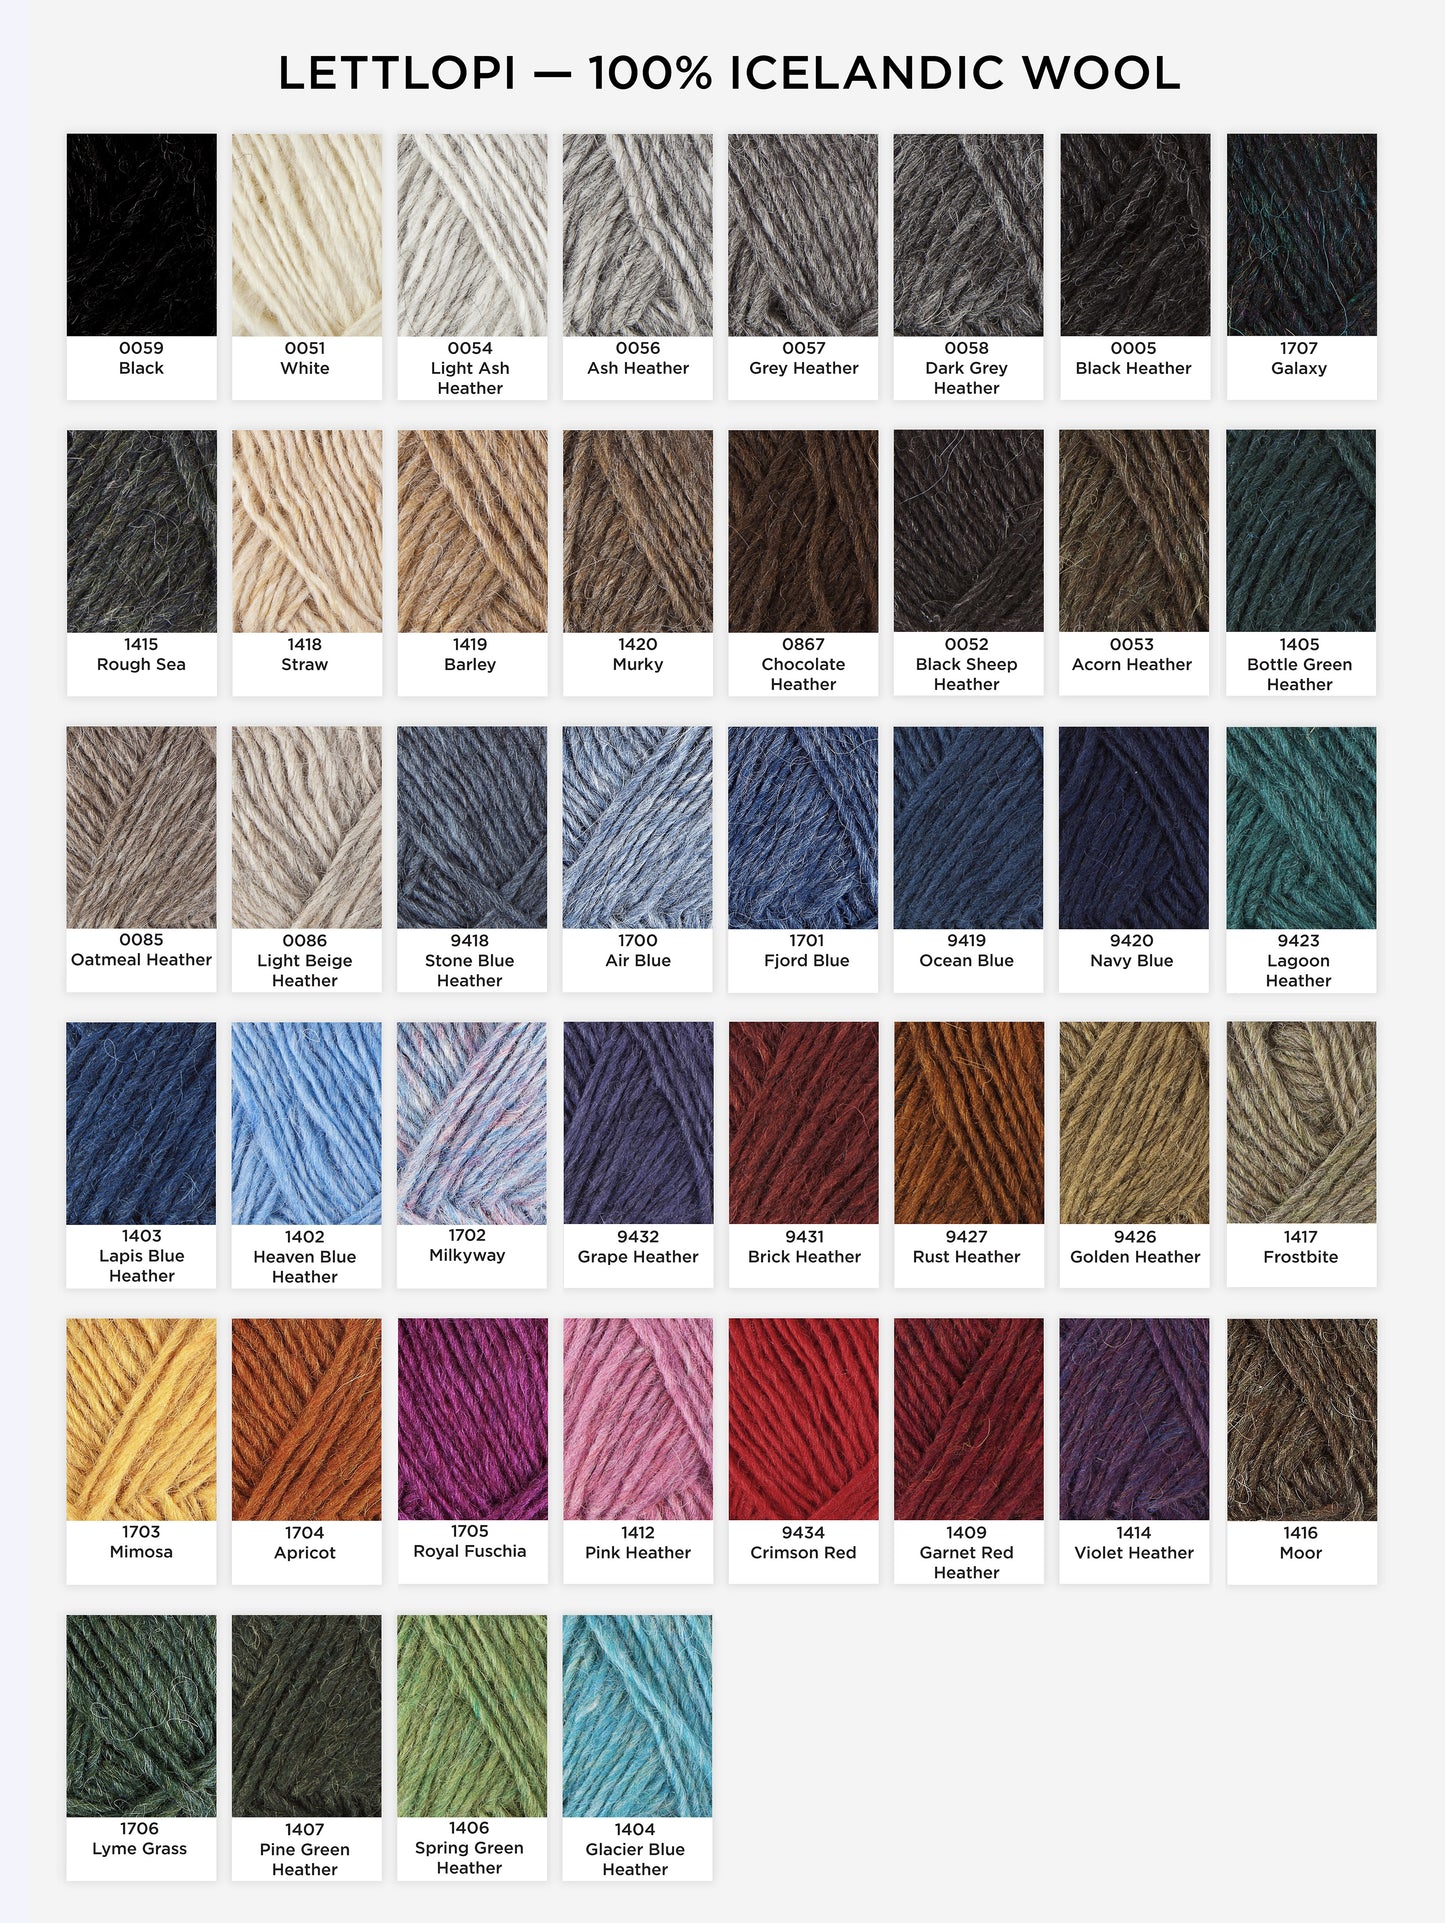 Lettlopi pure Icelandic yarn color palette